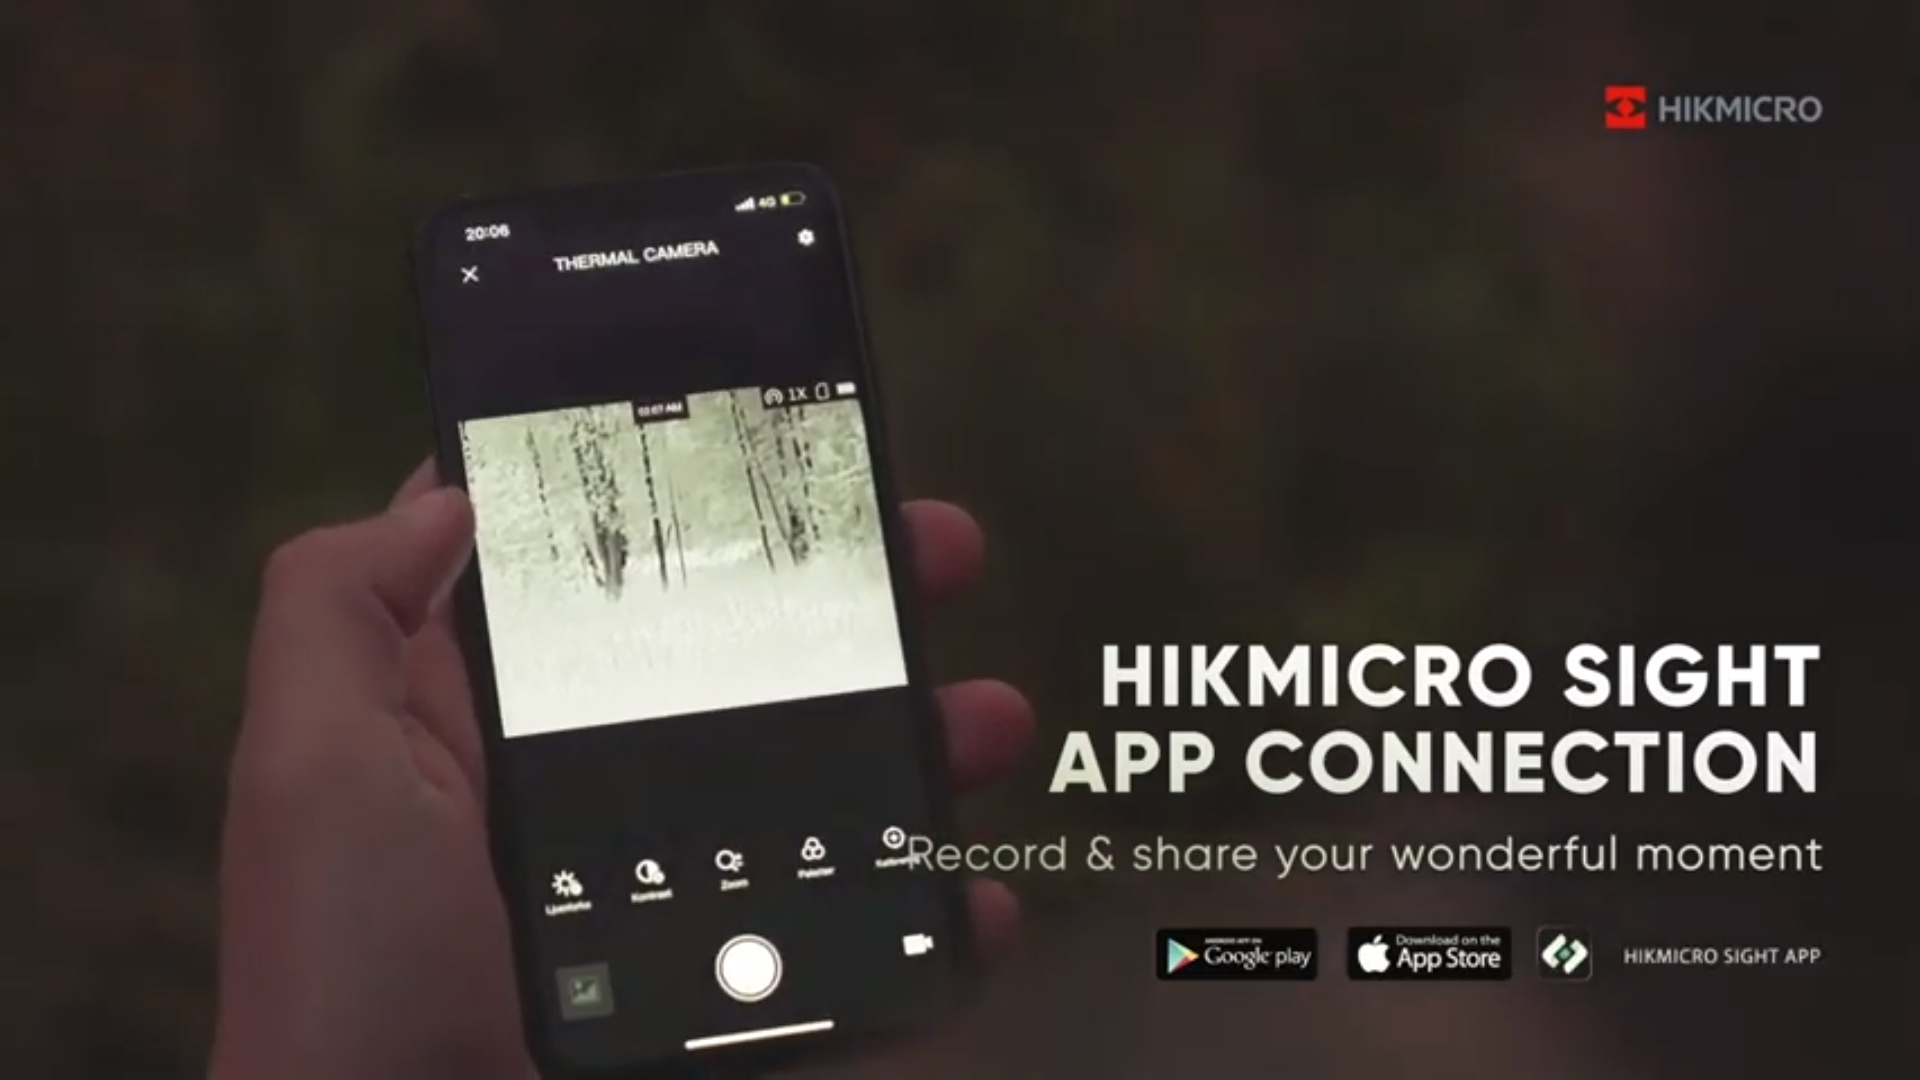 Hikmicro SIGHT app.